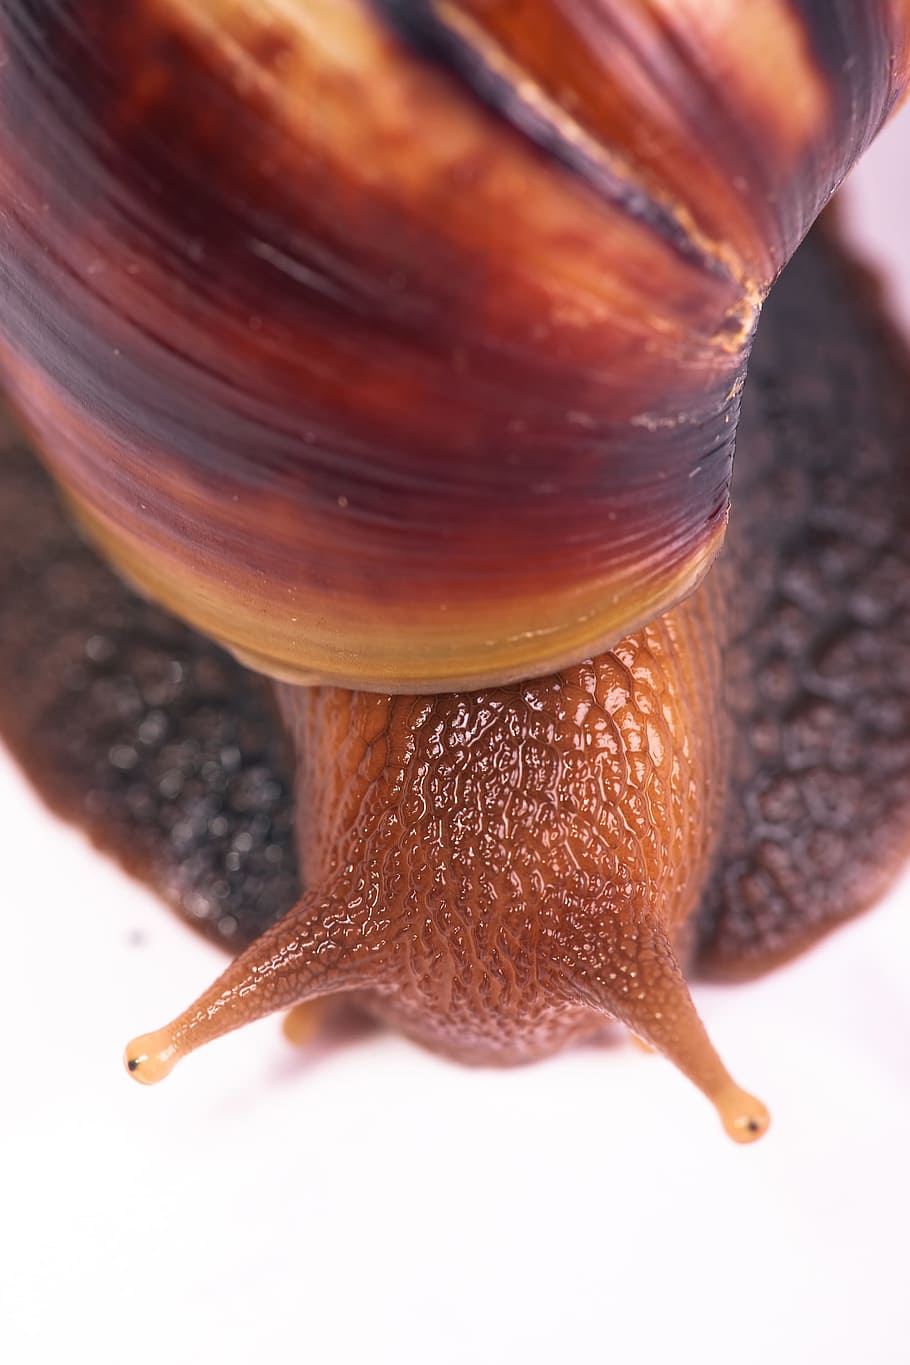 animal, antenna, brown, closeup, gastropoda, invertebrate, isolated, snails, mollusc, molluscan